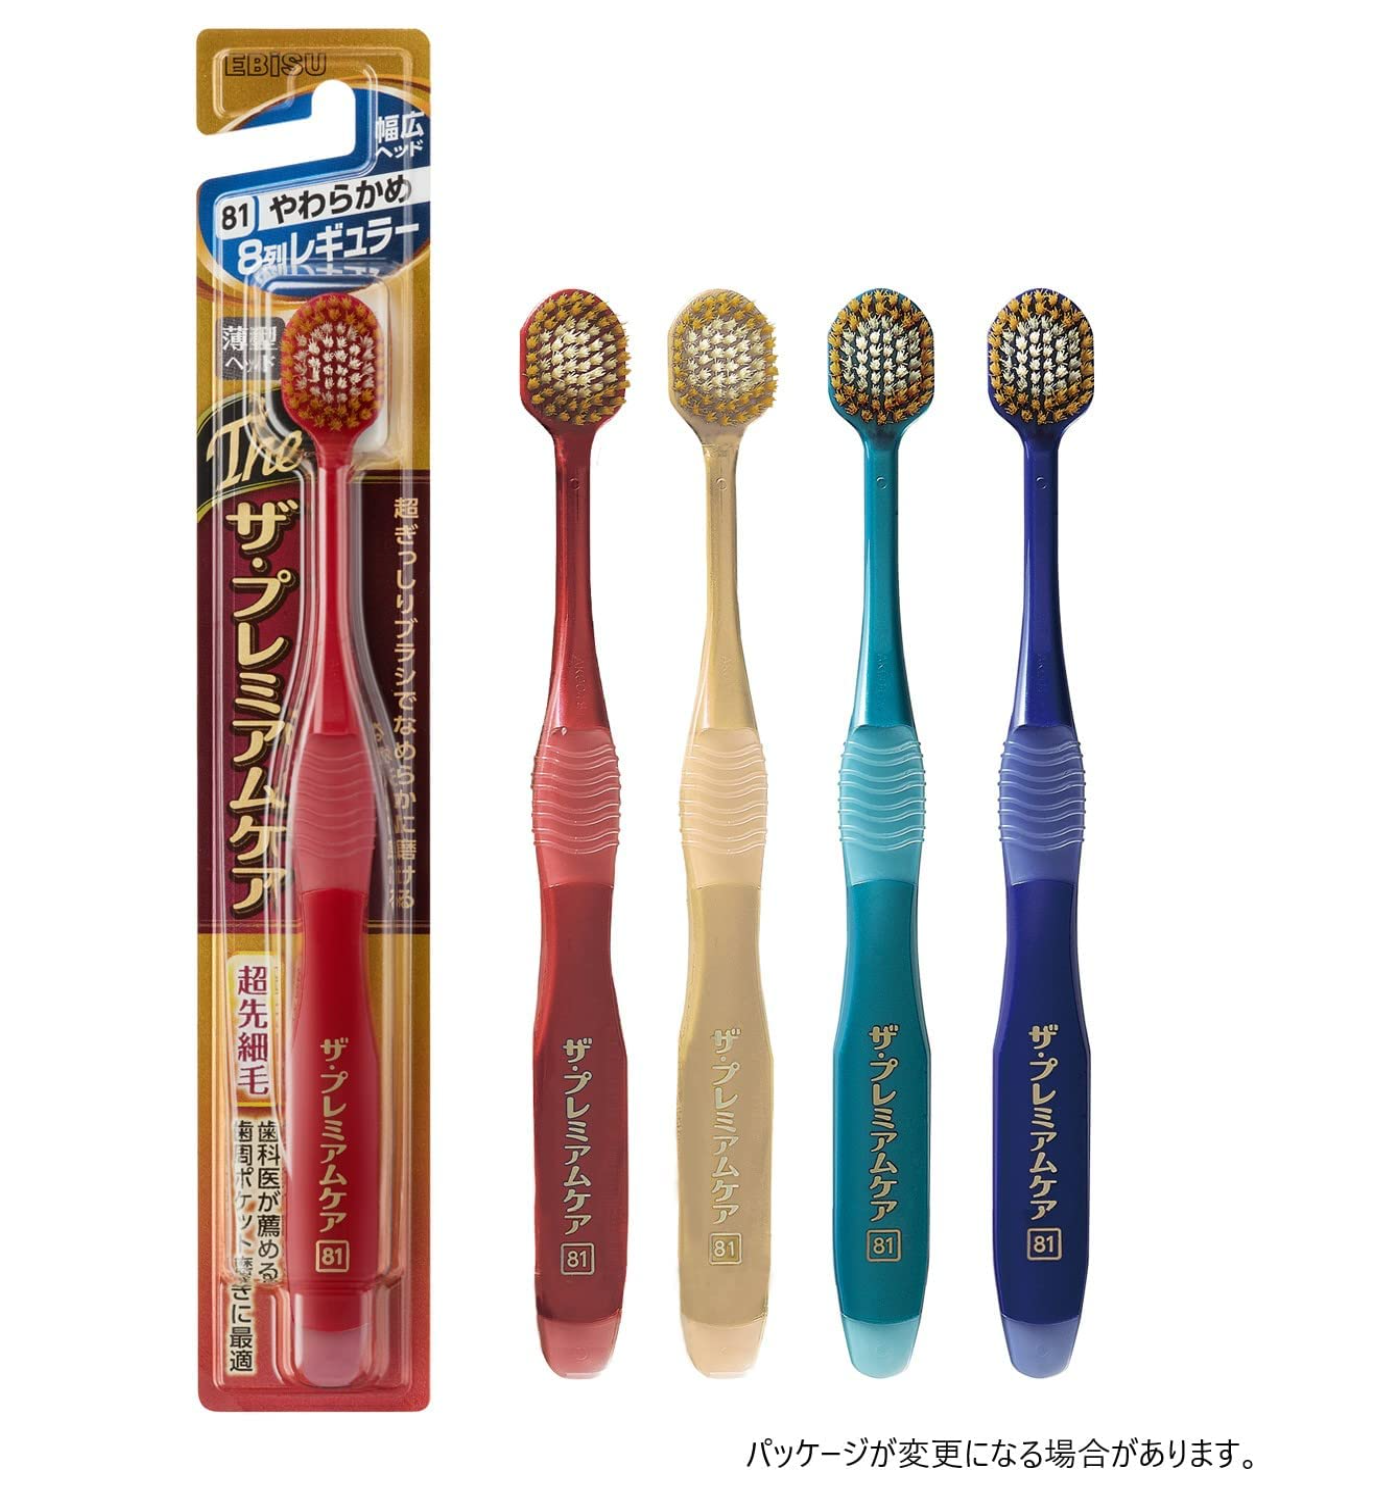 EBISU 惠百施日本百年品牌Premiumcare牙刷80號8列寬頭牙刷特別柔軟款3檔顏色隨機寄送